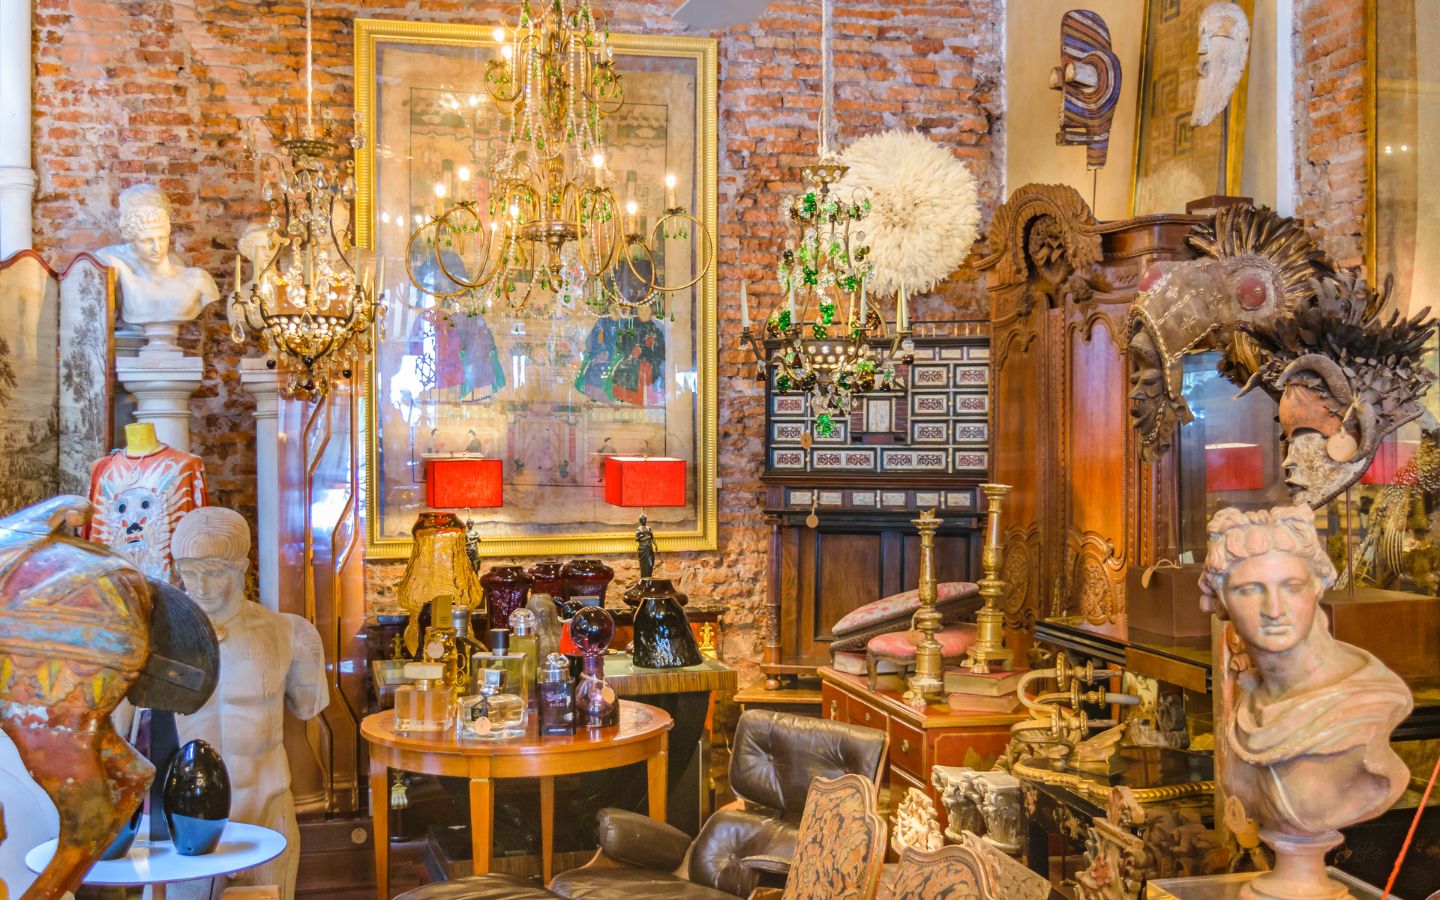 A bright antique shop displays a number of unique items